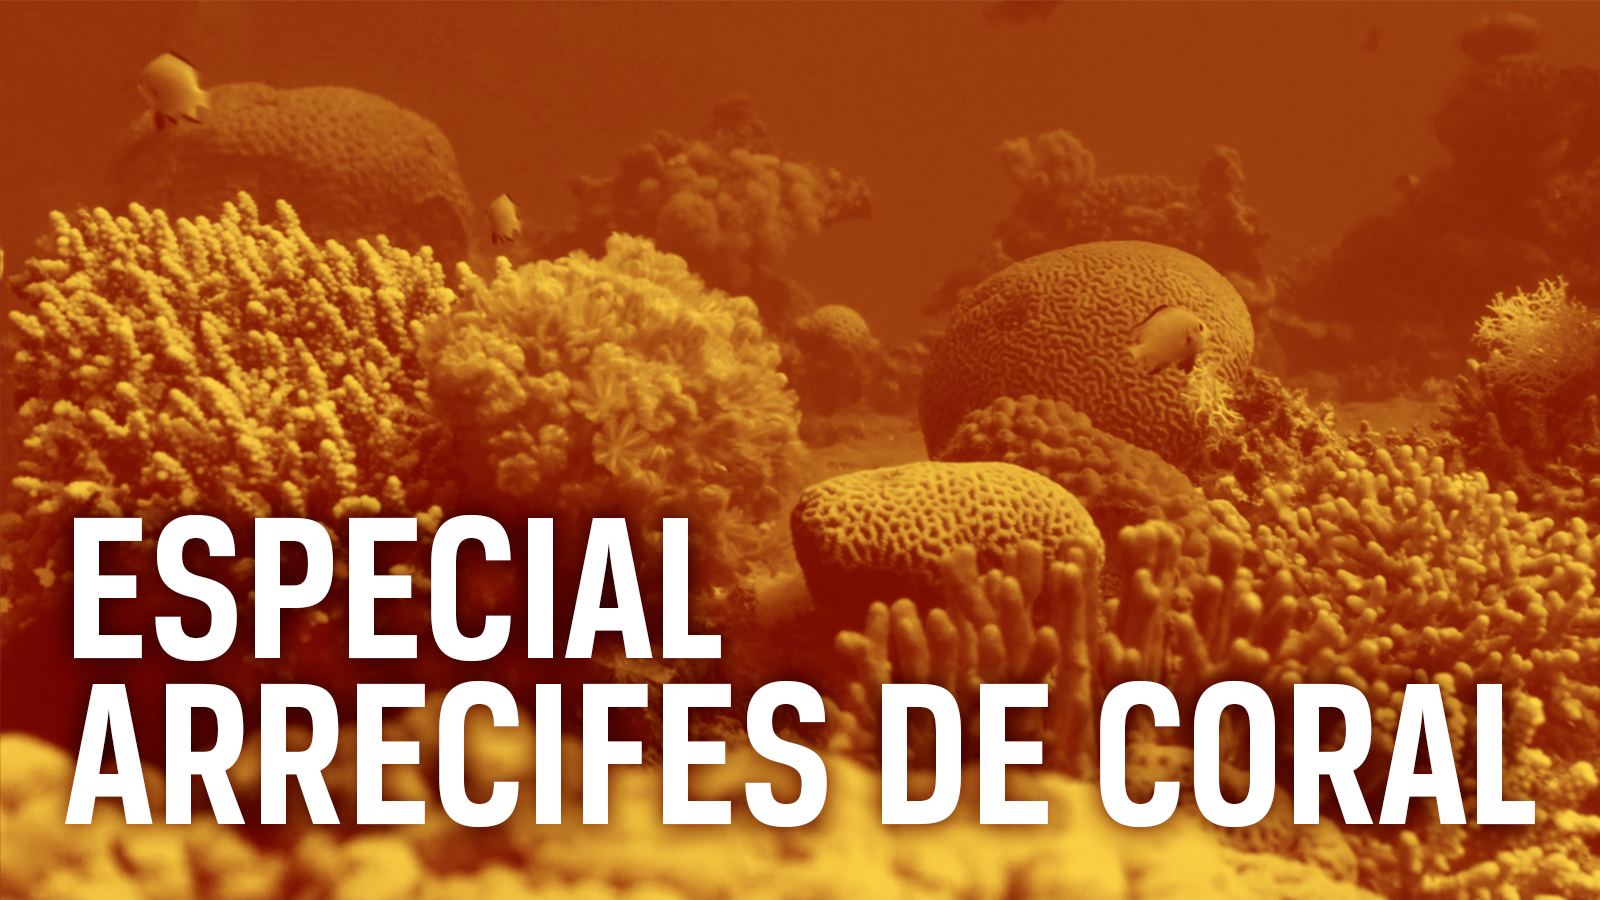 Especial arrecifes de coral